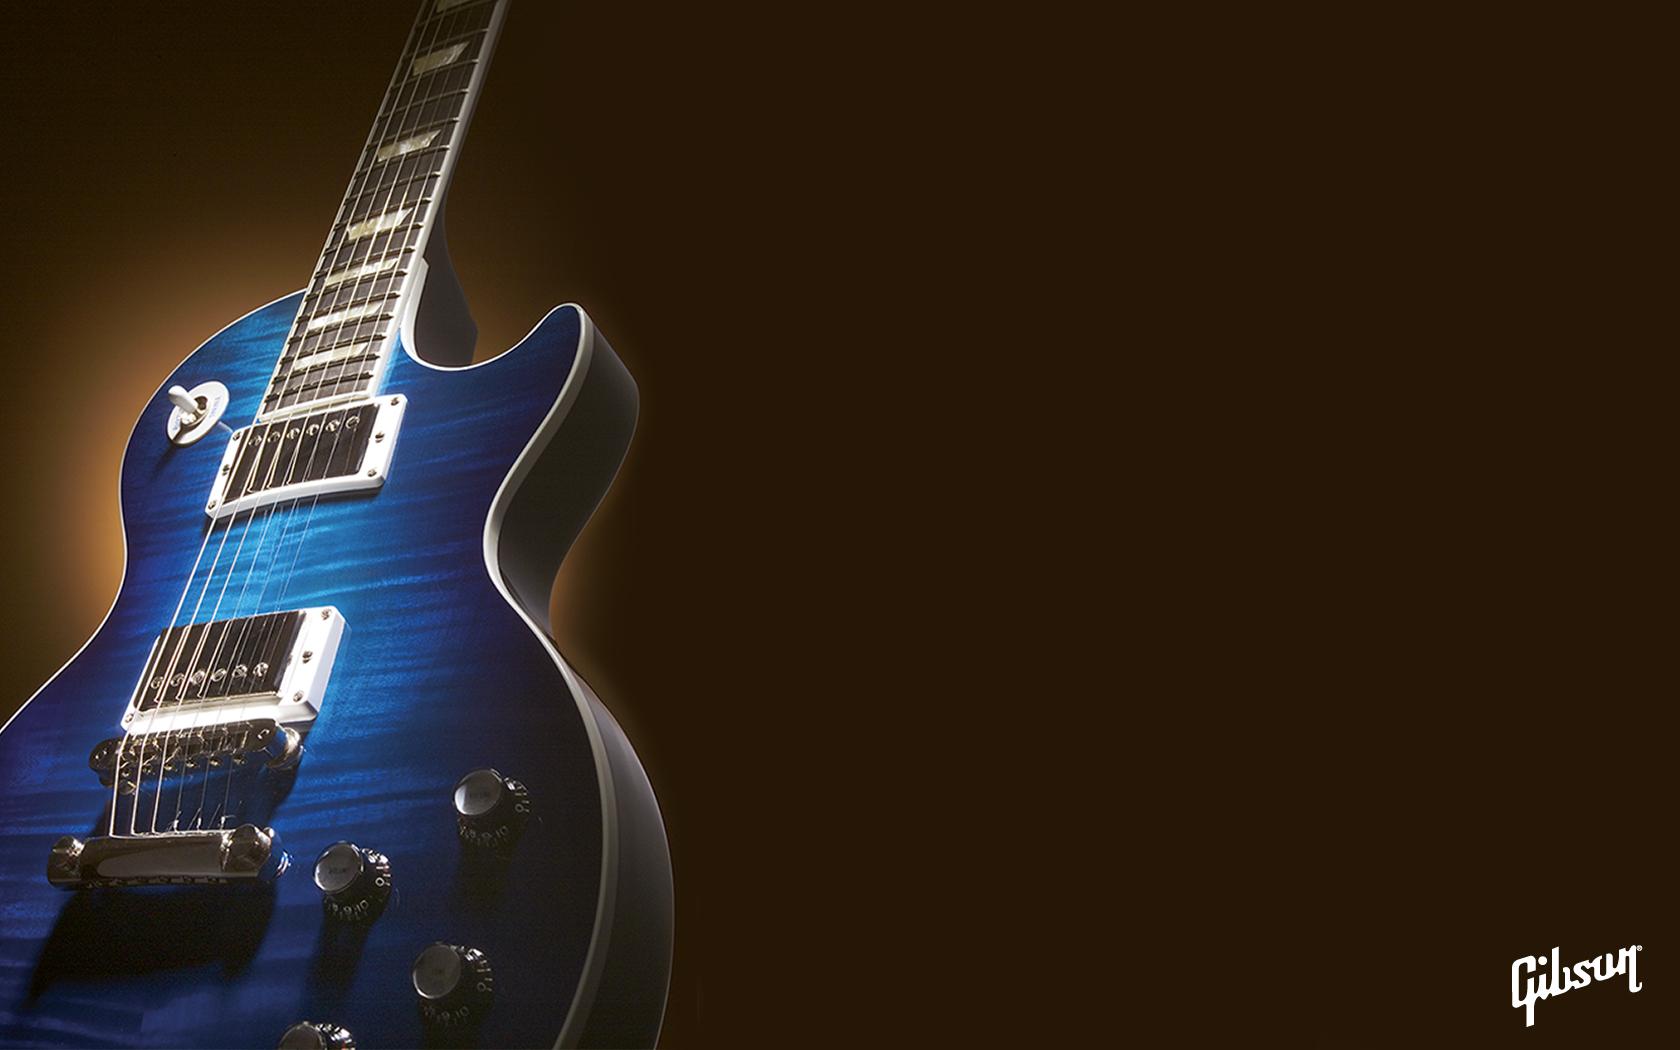 Gibson Guitar Wallpaper Free on .wallpaperafari.com